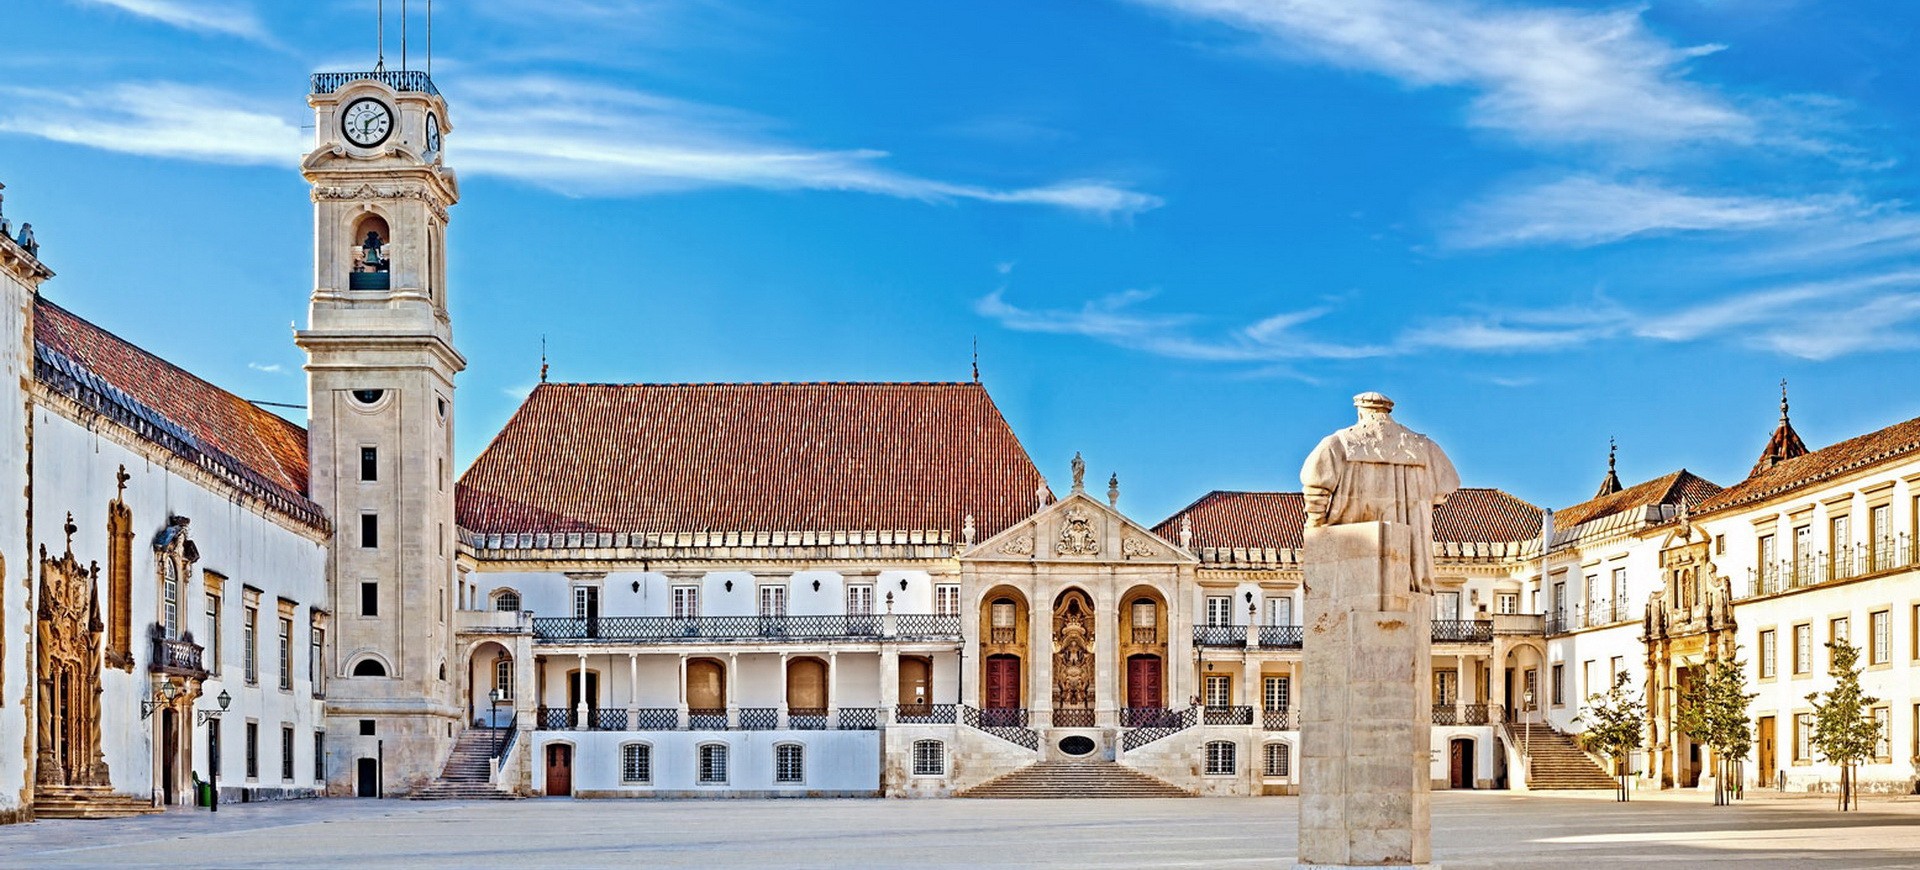 Portugal Coimbra